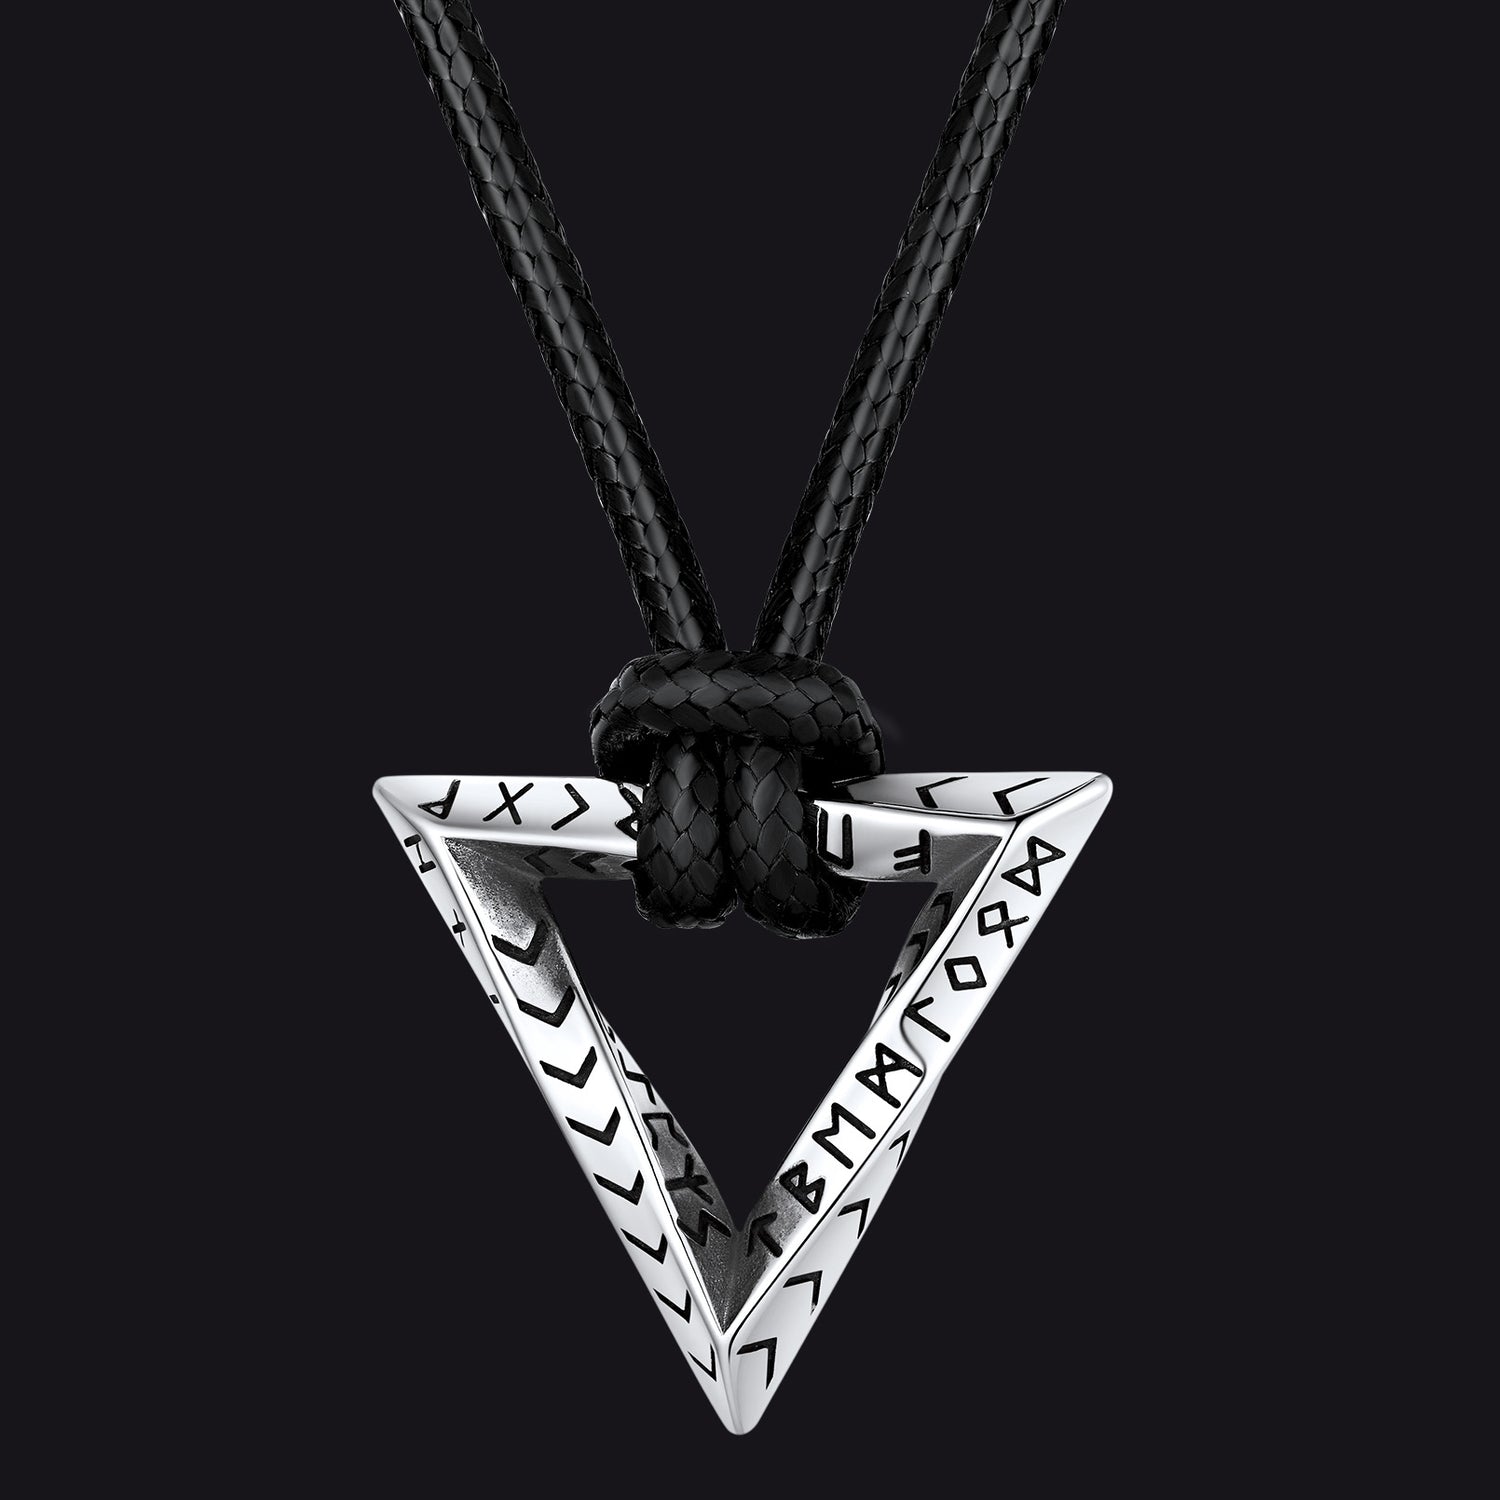 files/FaithHeart-Runes-Mobius-Strip-Triangle-Pendant-Necklace.jpg